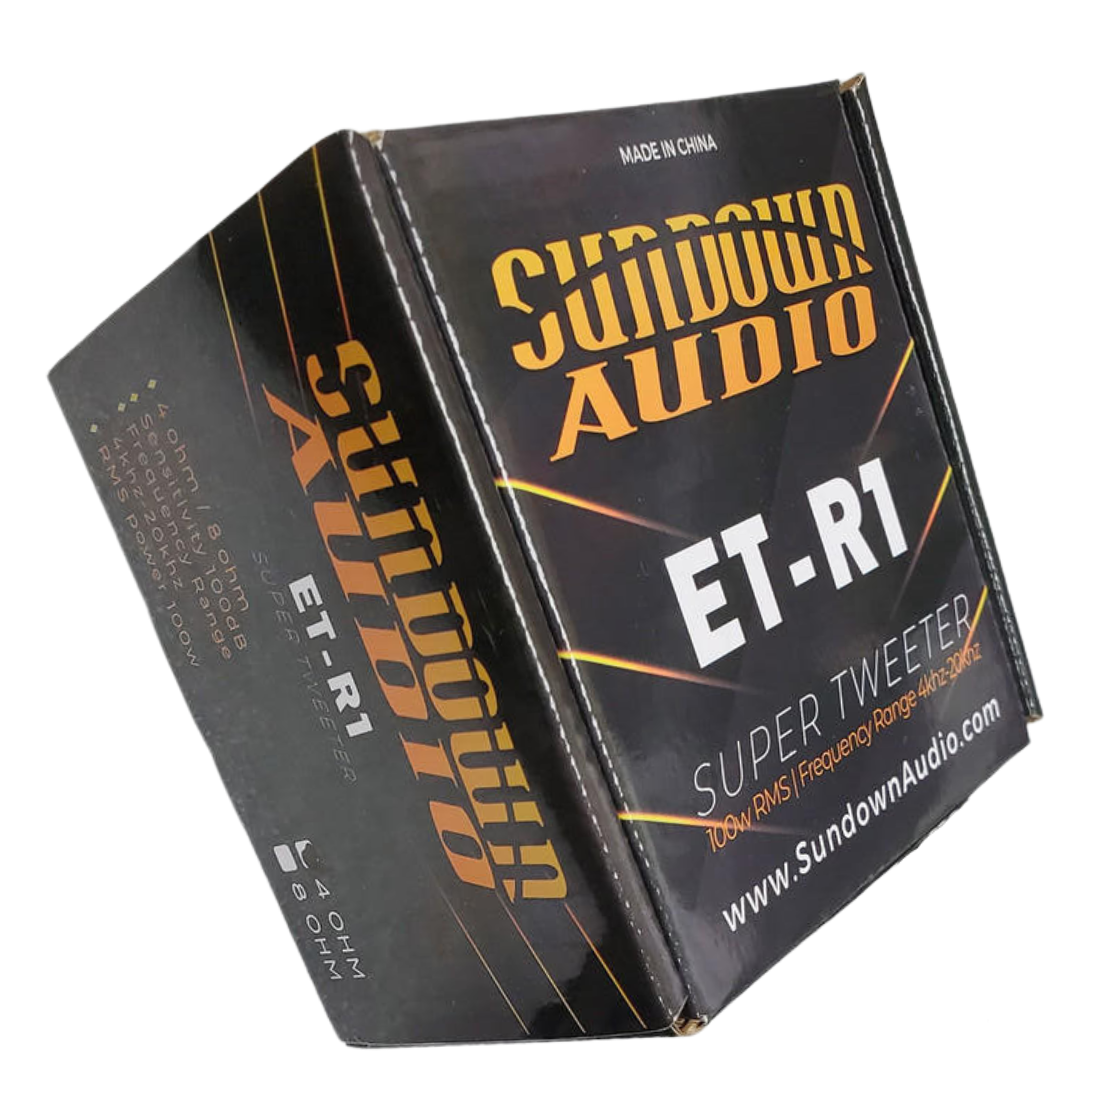 Sundown Audio ET-R1 4-Ohm 3.5" 100 Watts RMS Power Car Audio Super Tweeter